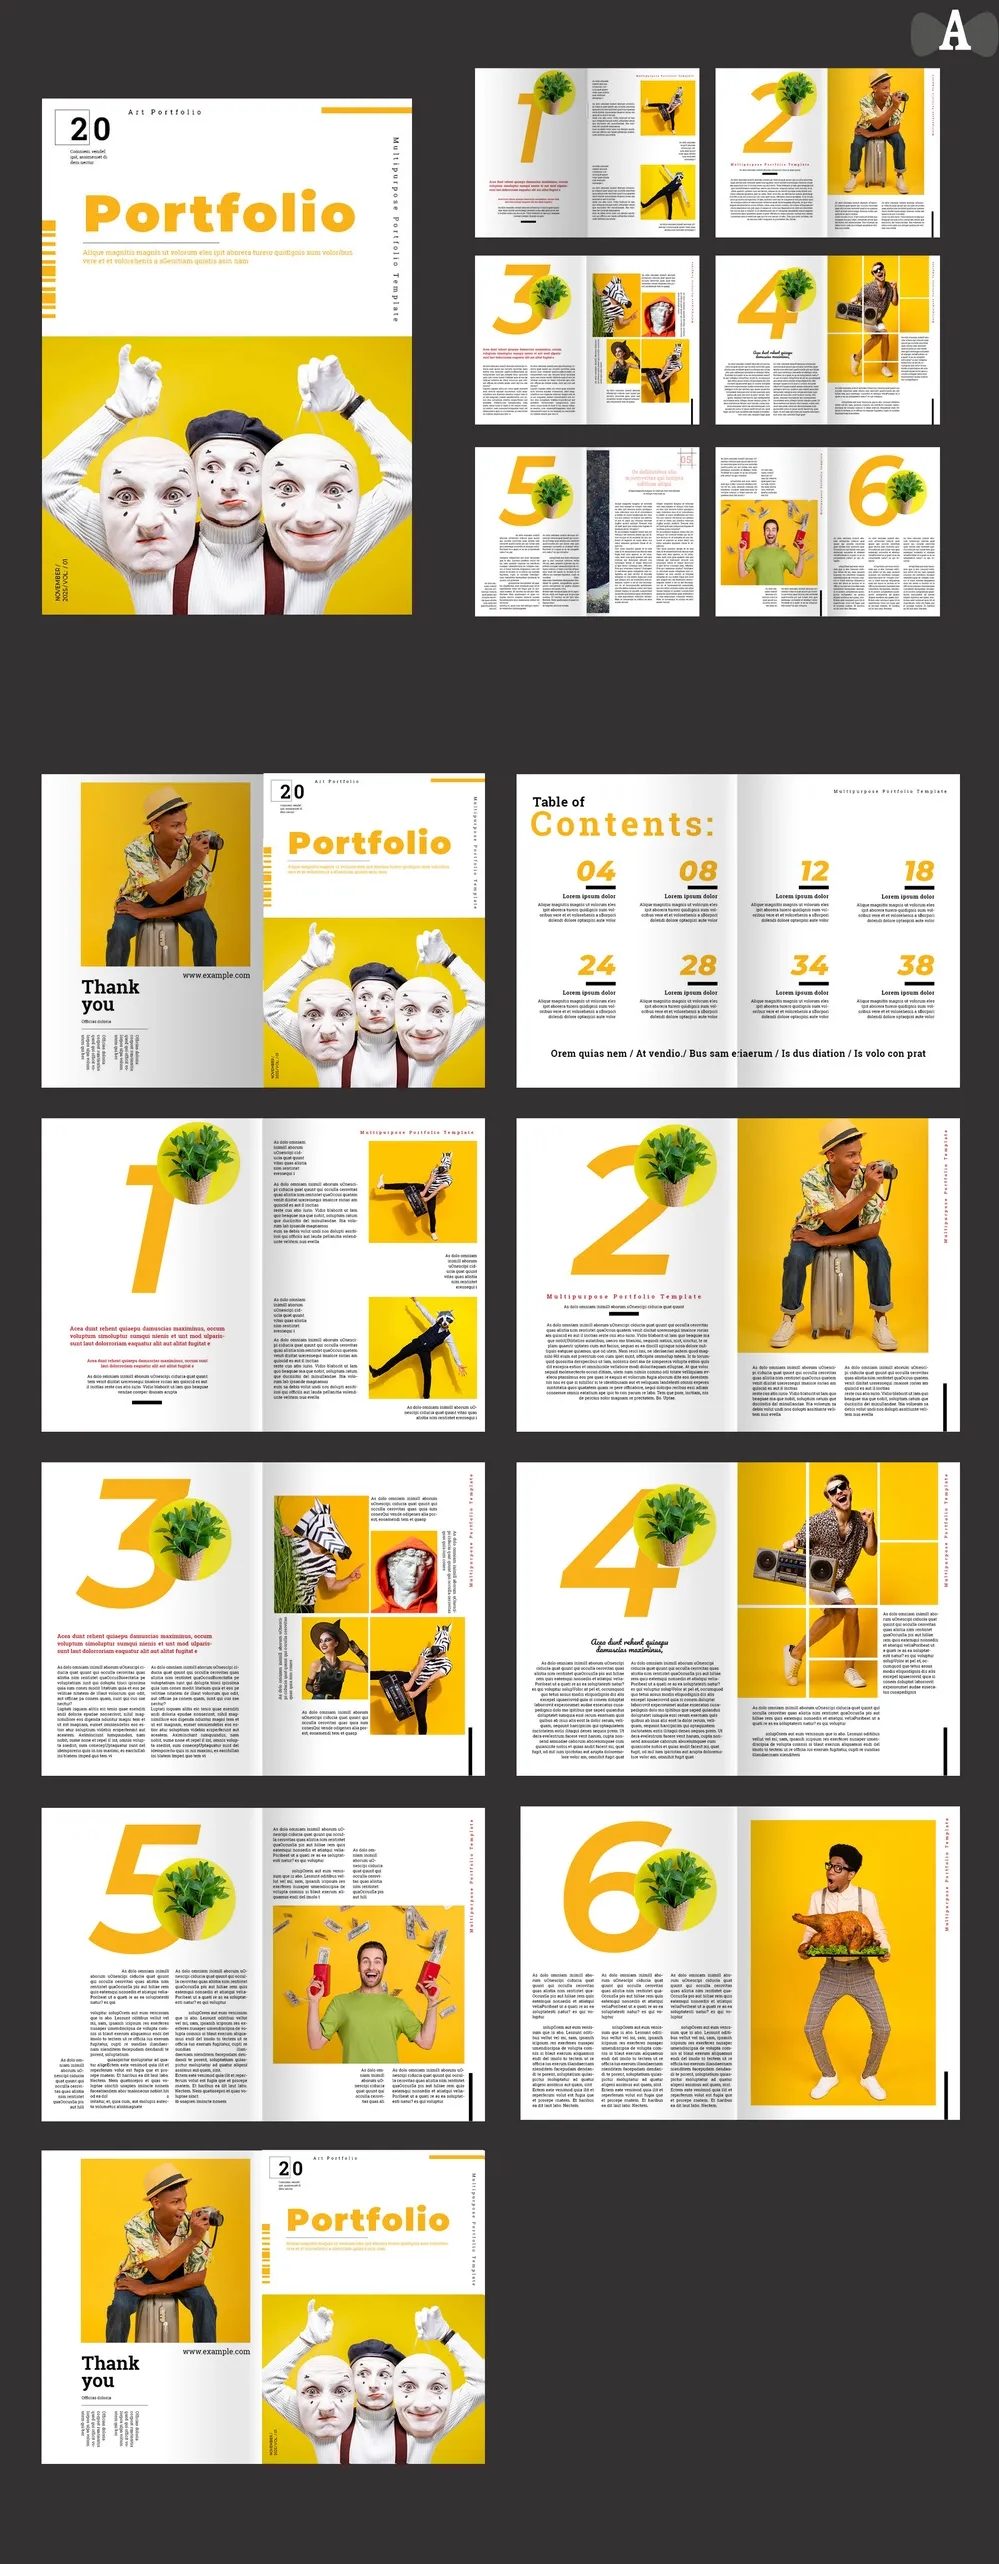 Adobestock - Portfolio Magazine Template 723808873